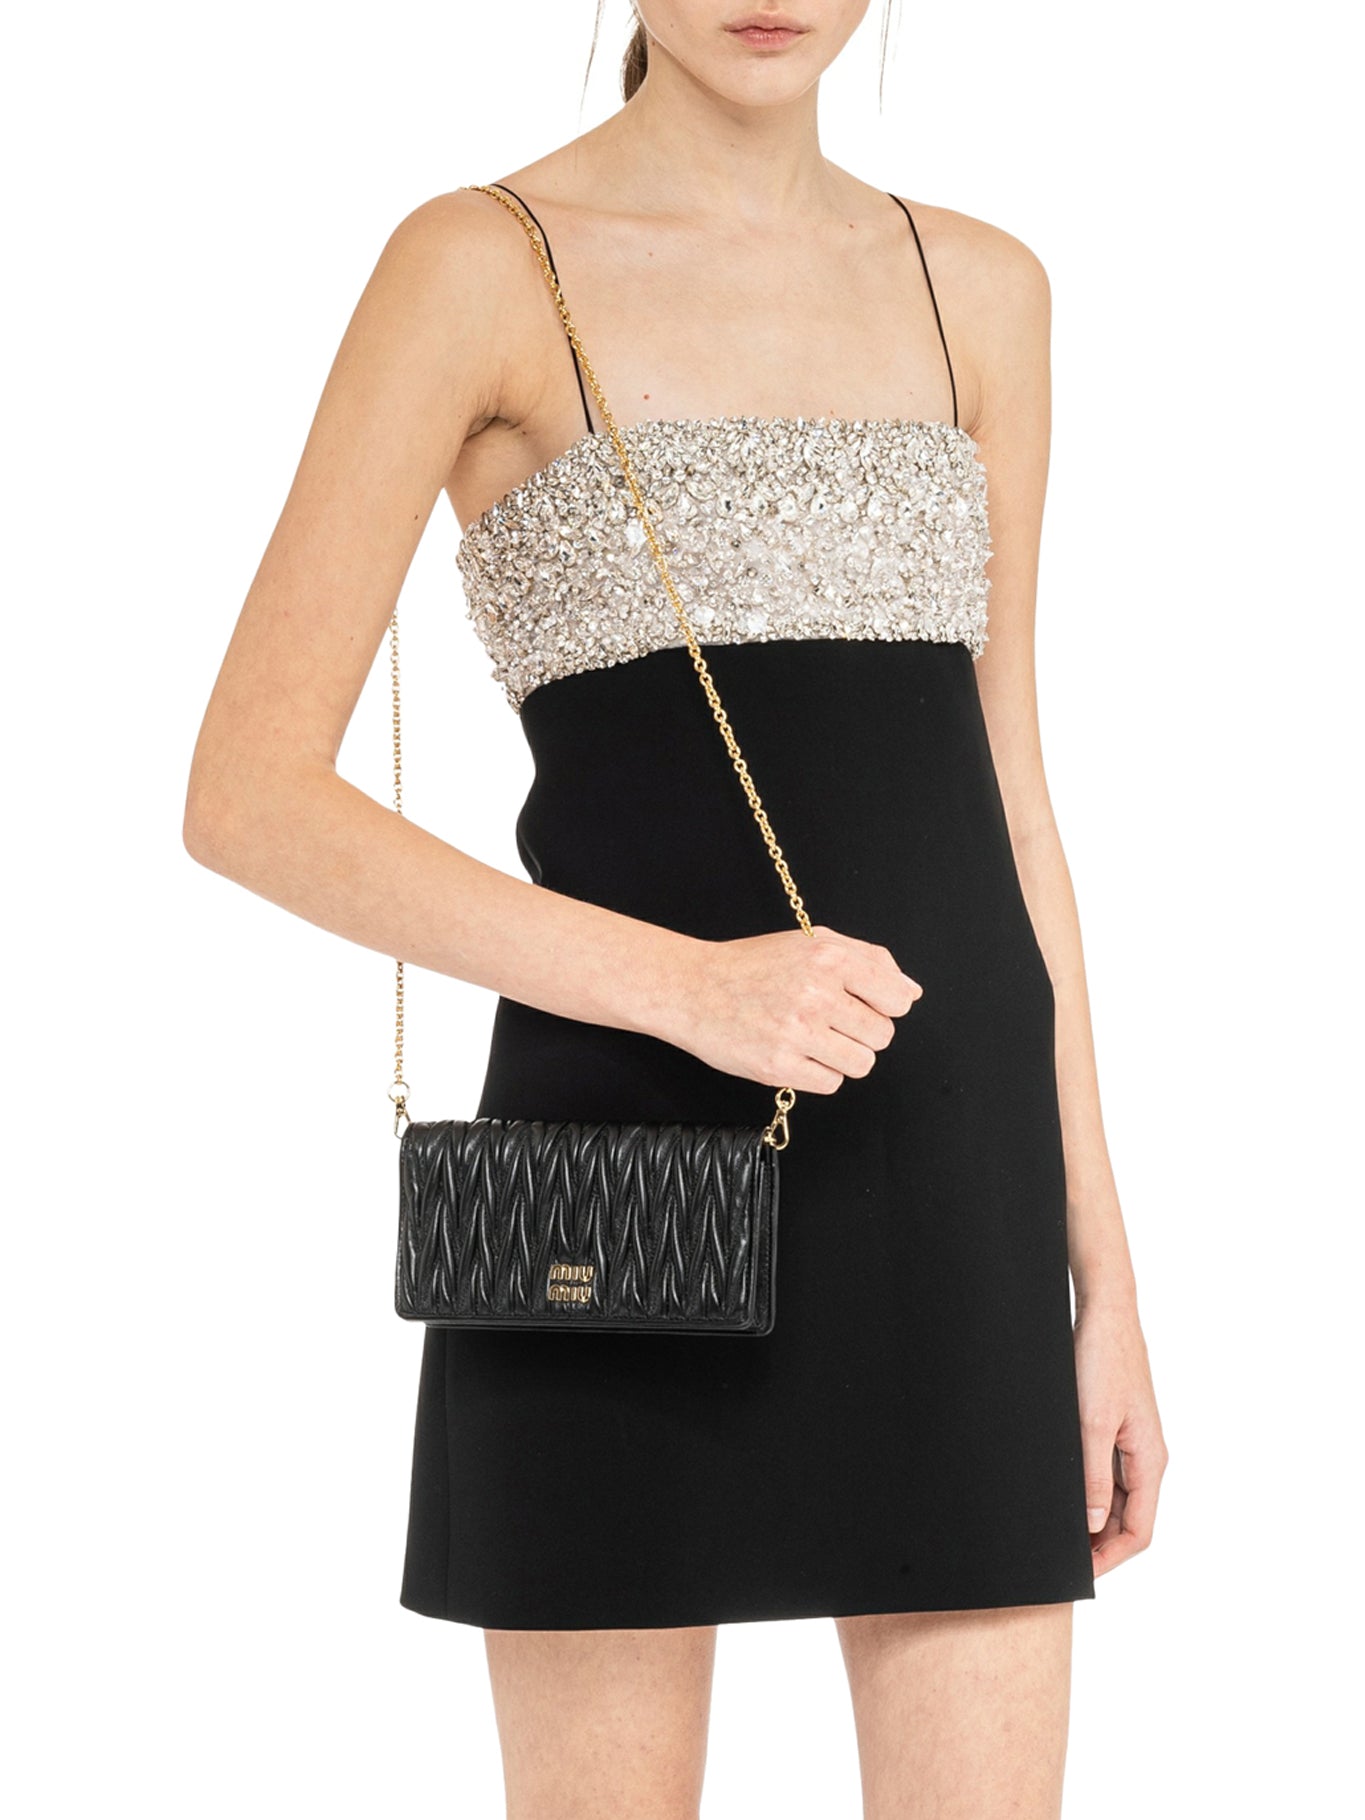 Victoria`s Secret Chevron Quilt Bond Street Black Shoulder Bag - Victoria's  Secret bag 